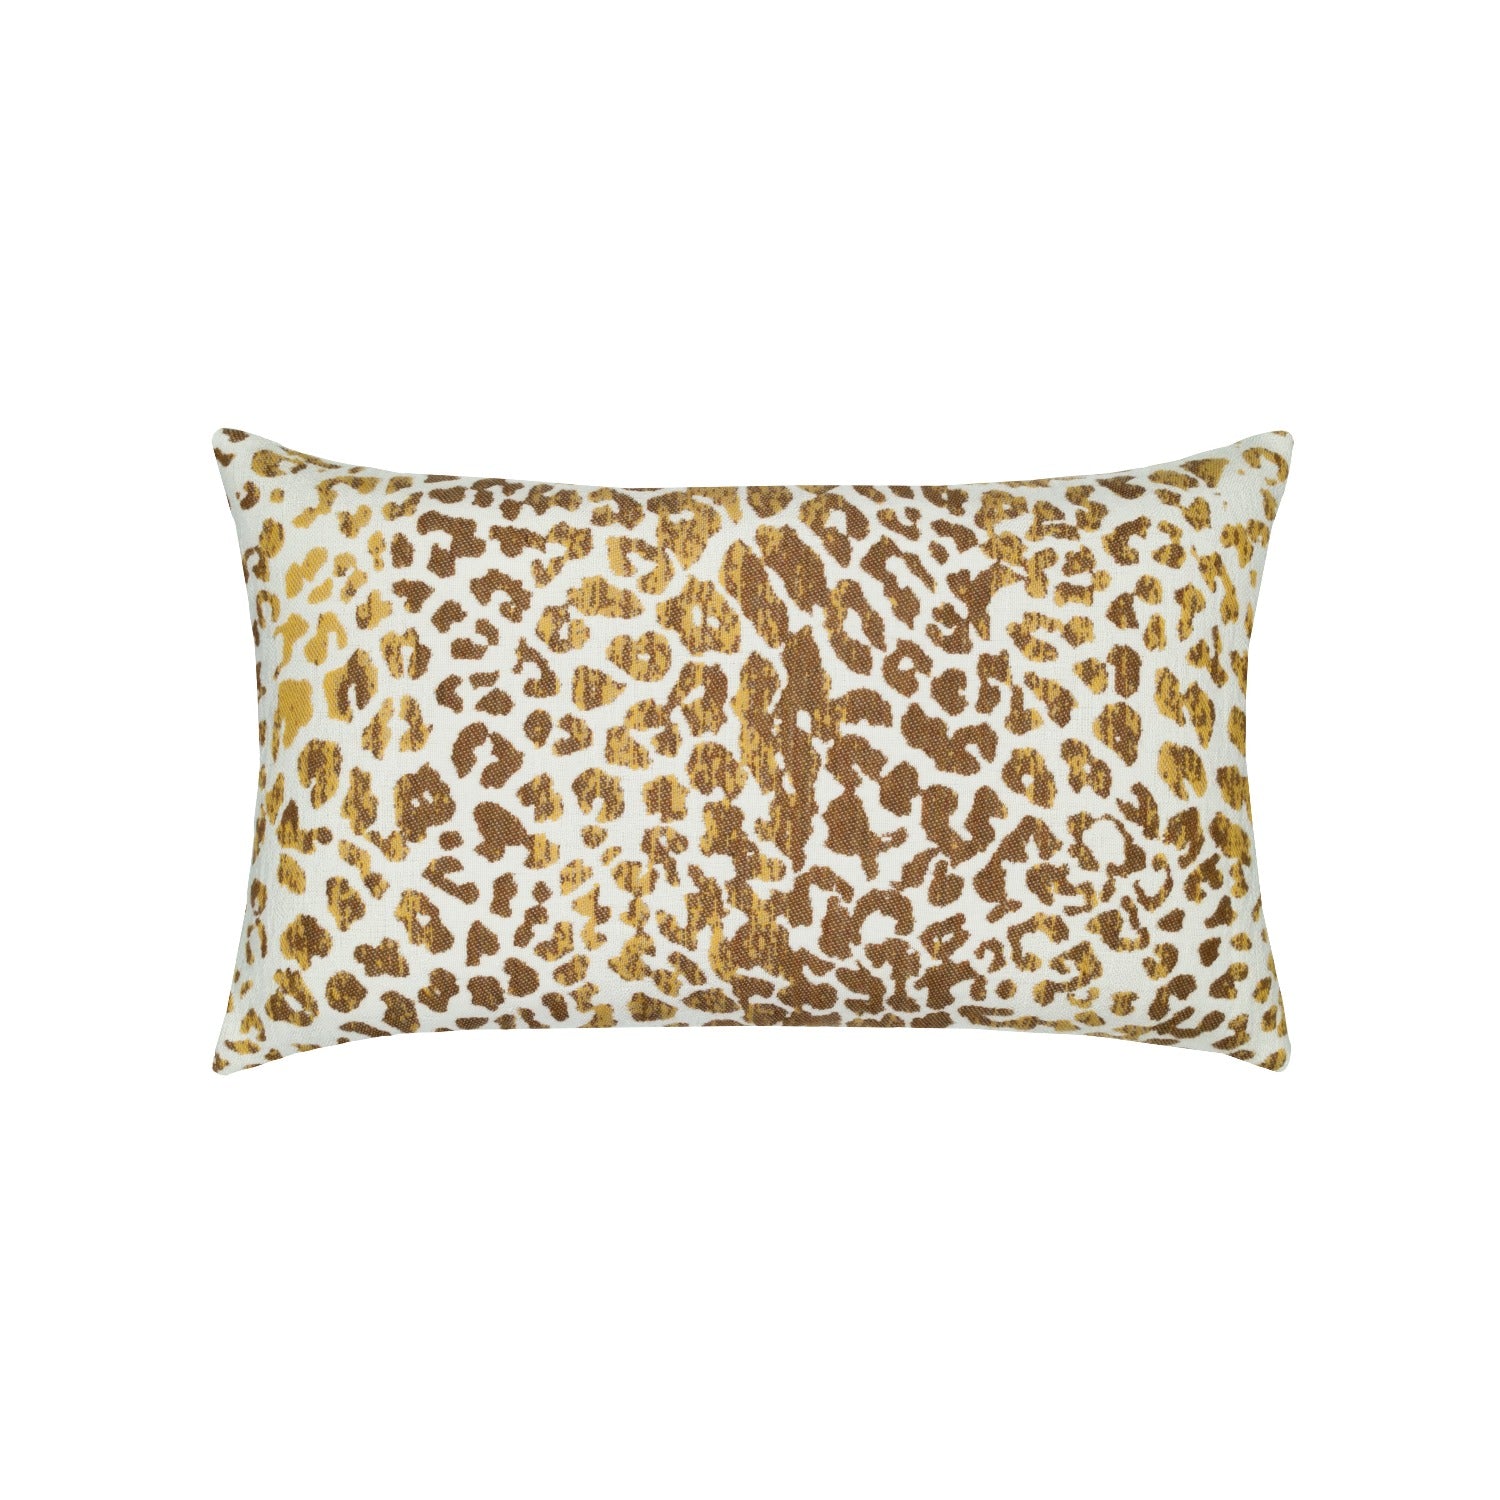 Elaine Smith 12" x 20" Lumbar Outdoor Pillow - Wild One Caramel - Polyester Fiber Fill Throw Pillows 12030991